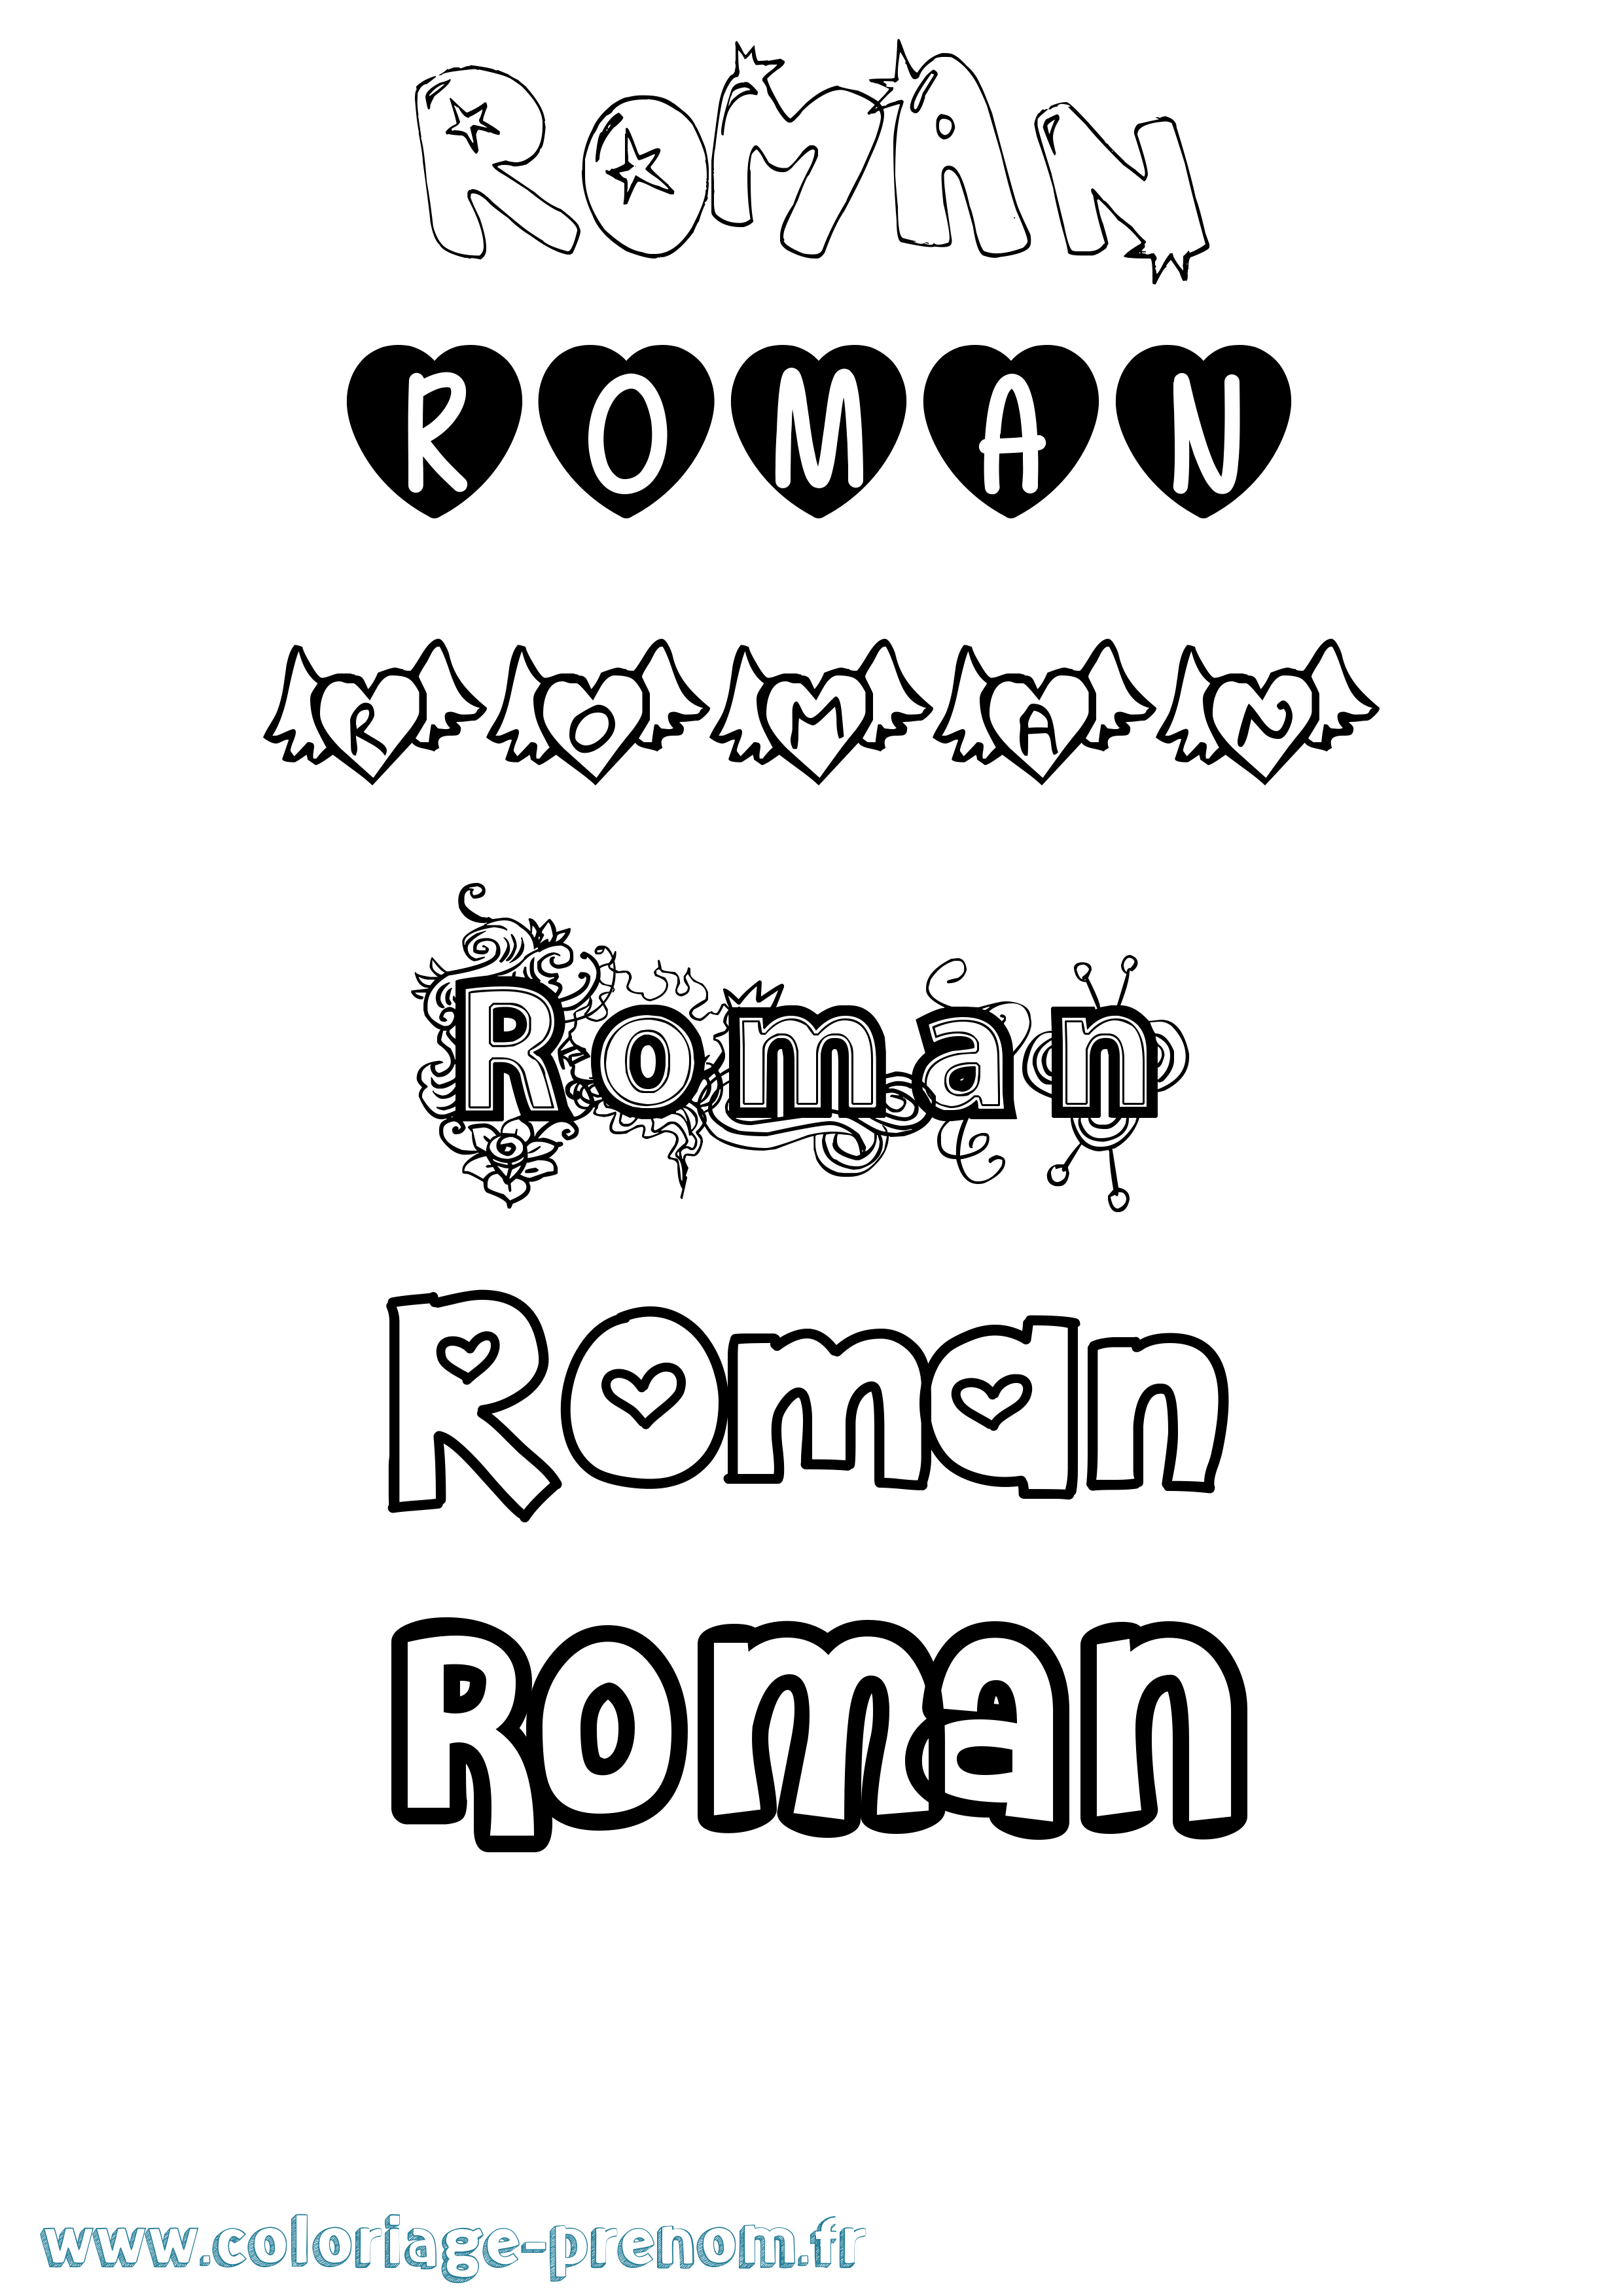 Coloriage prénom Roman